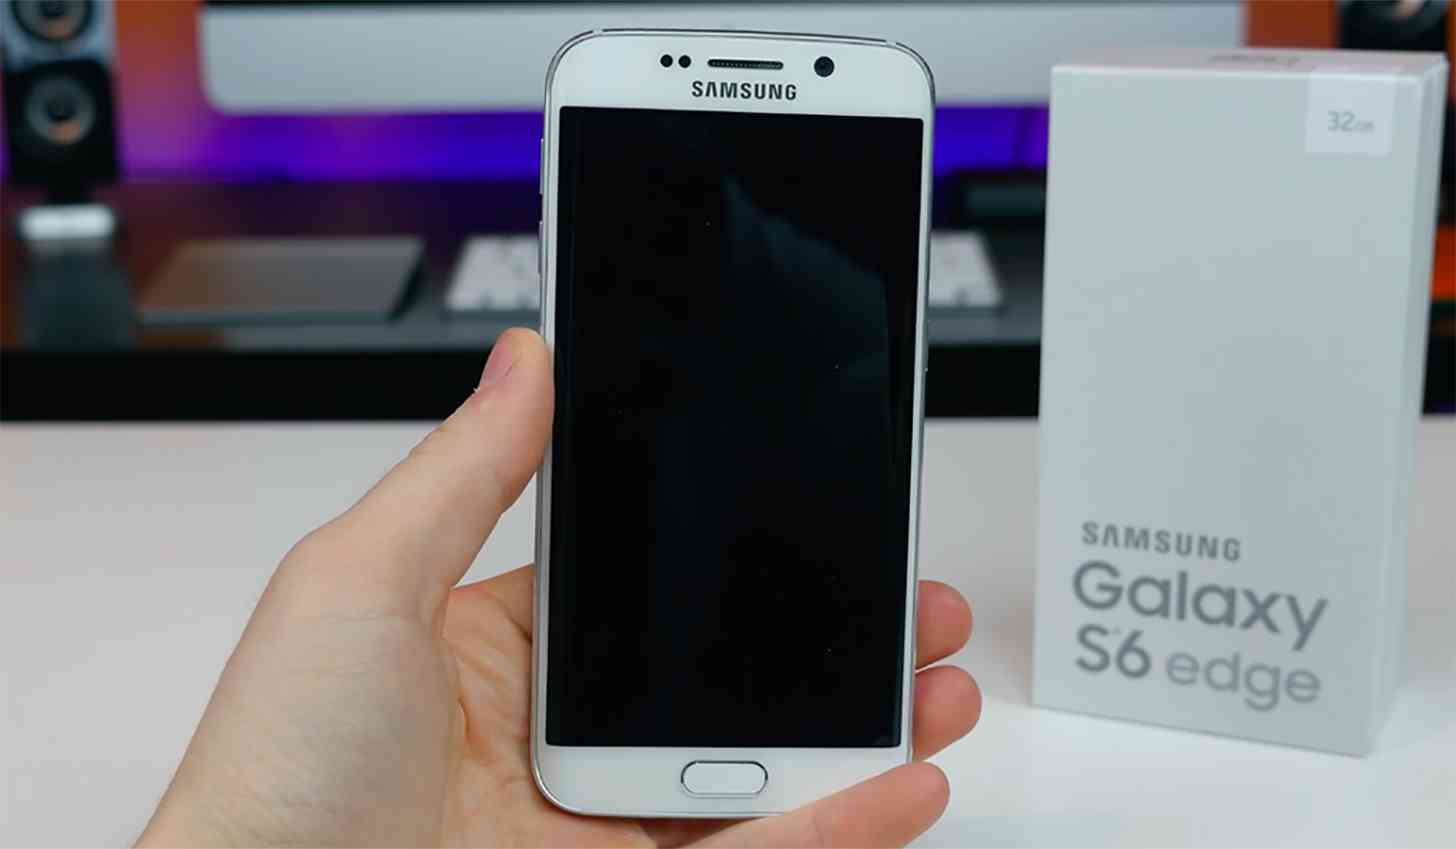 Samsung Galaxy S6 edge hands on large